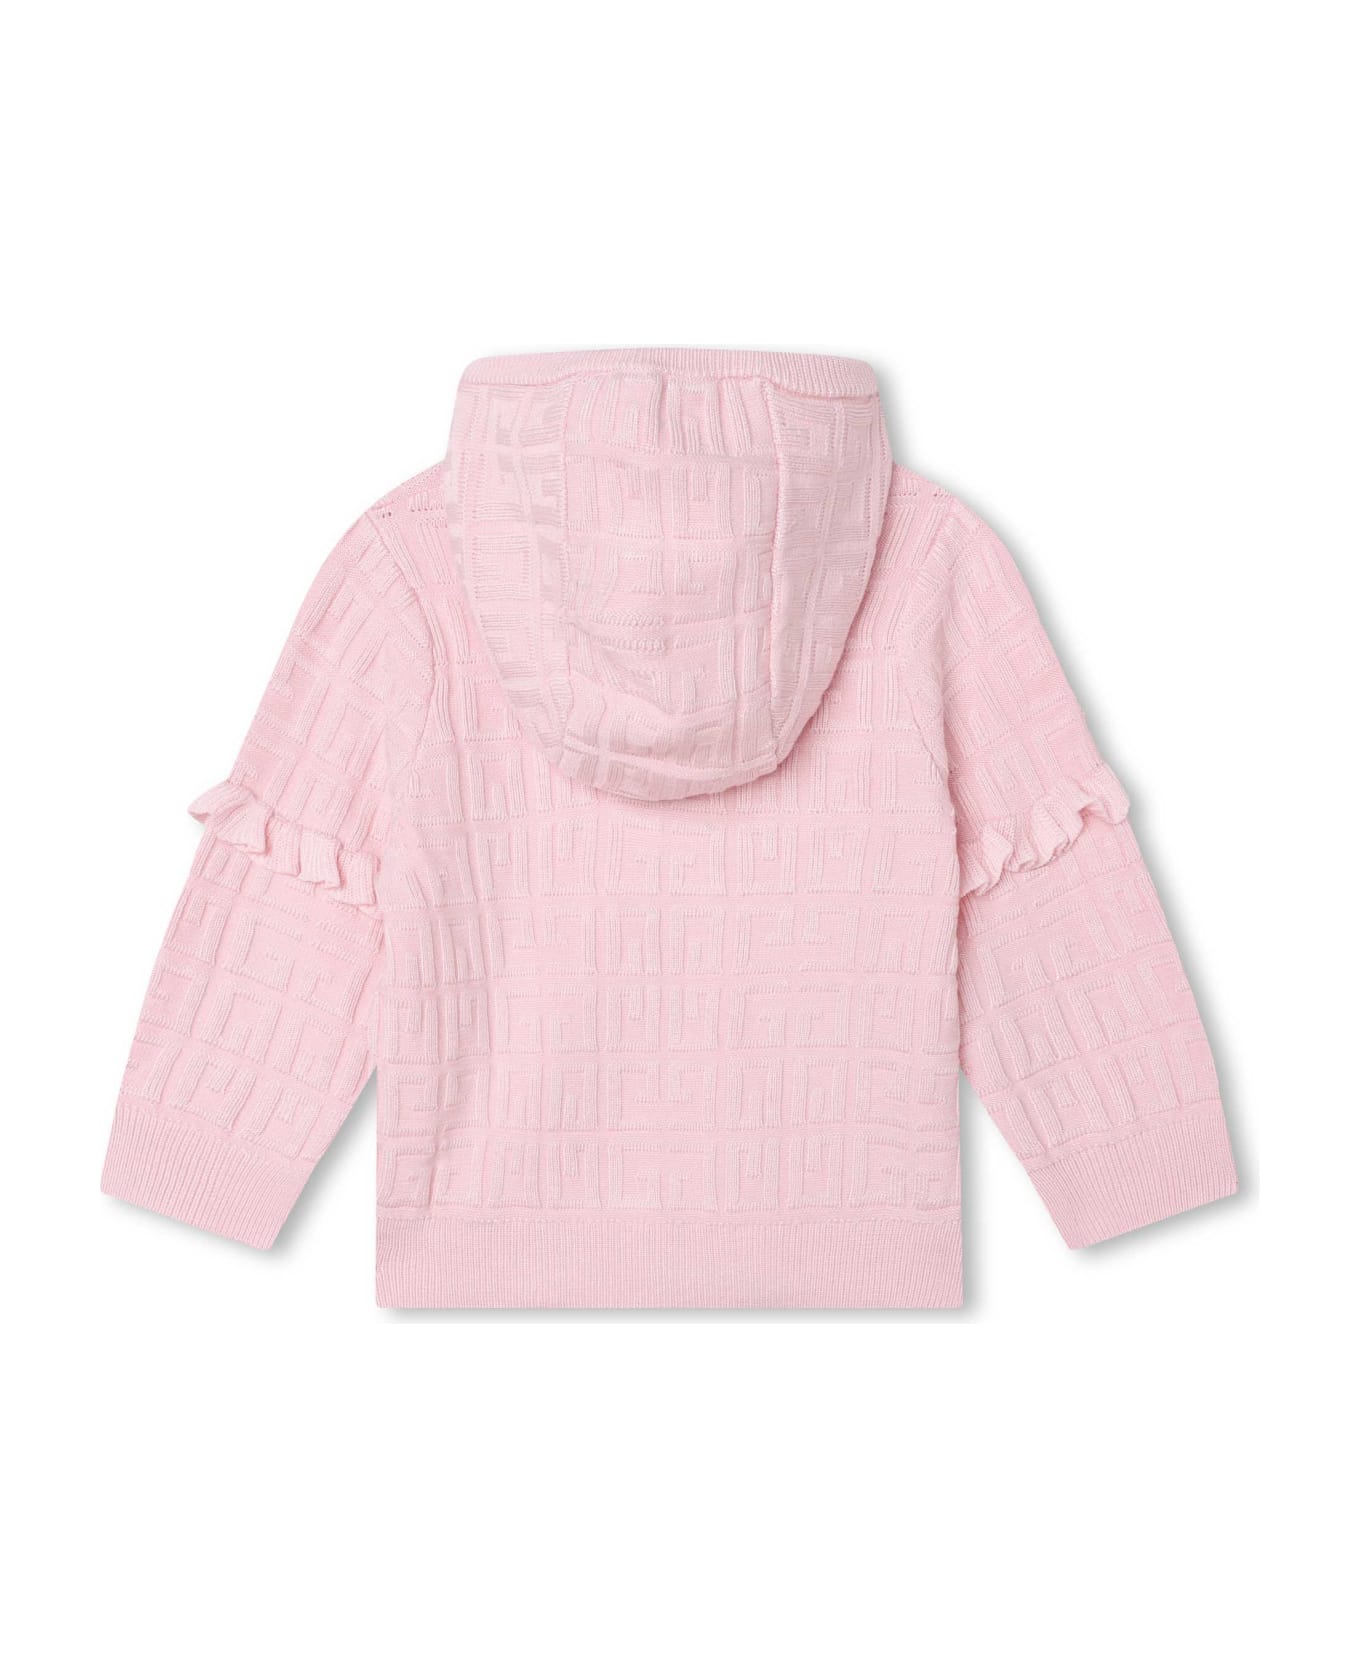 Givenchy Cardigan - Pink